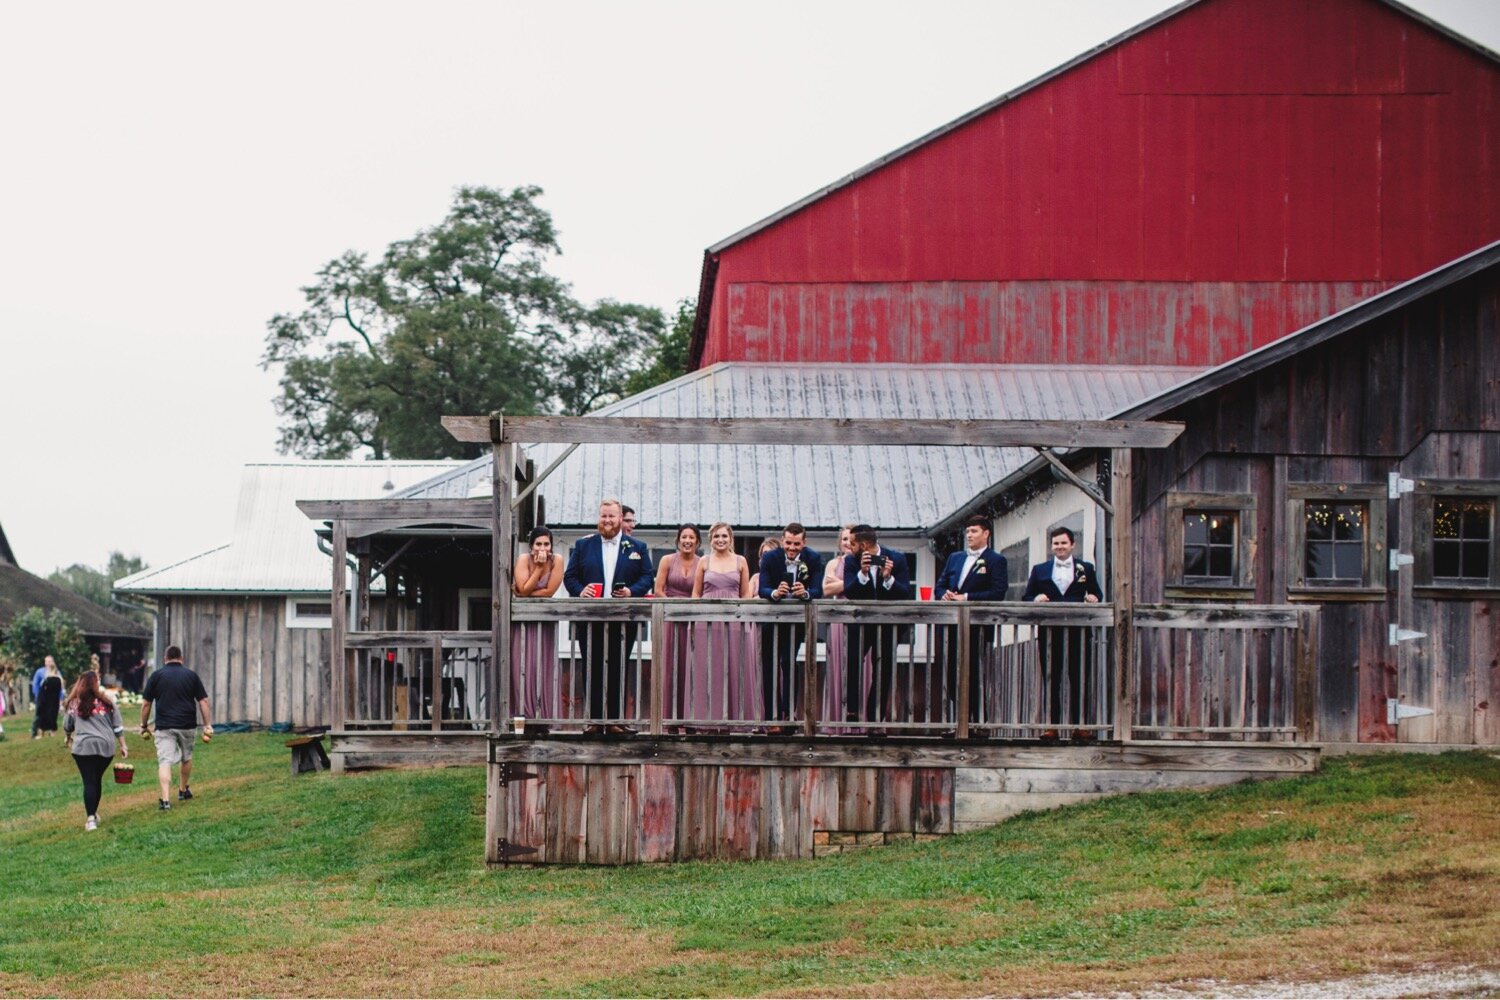 Suljevic-138_Weston_Red_Barn_Farm_Wedding_Kansas_City_Missouri_Photography.jpg